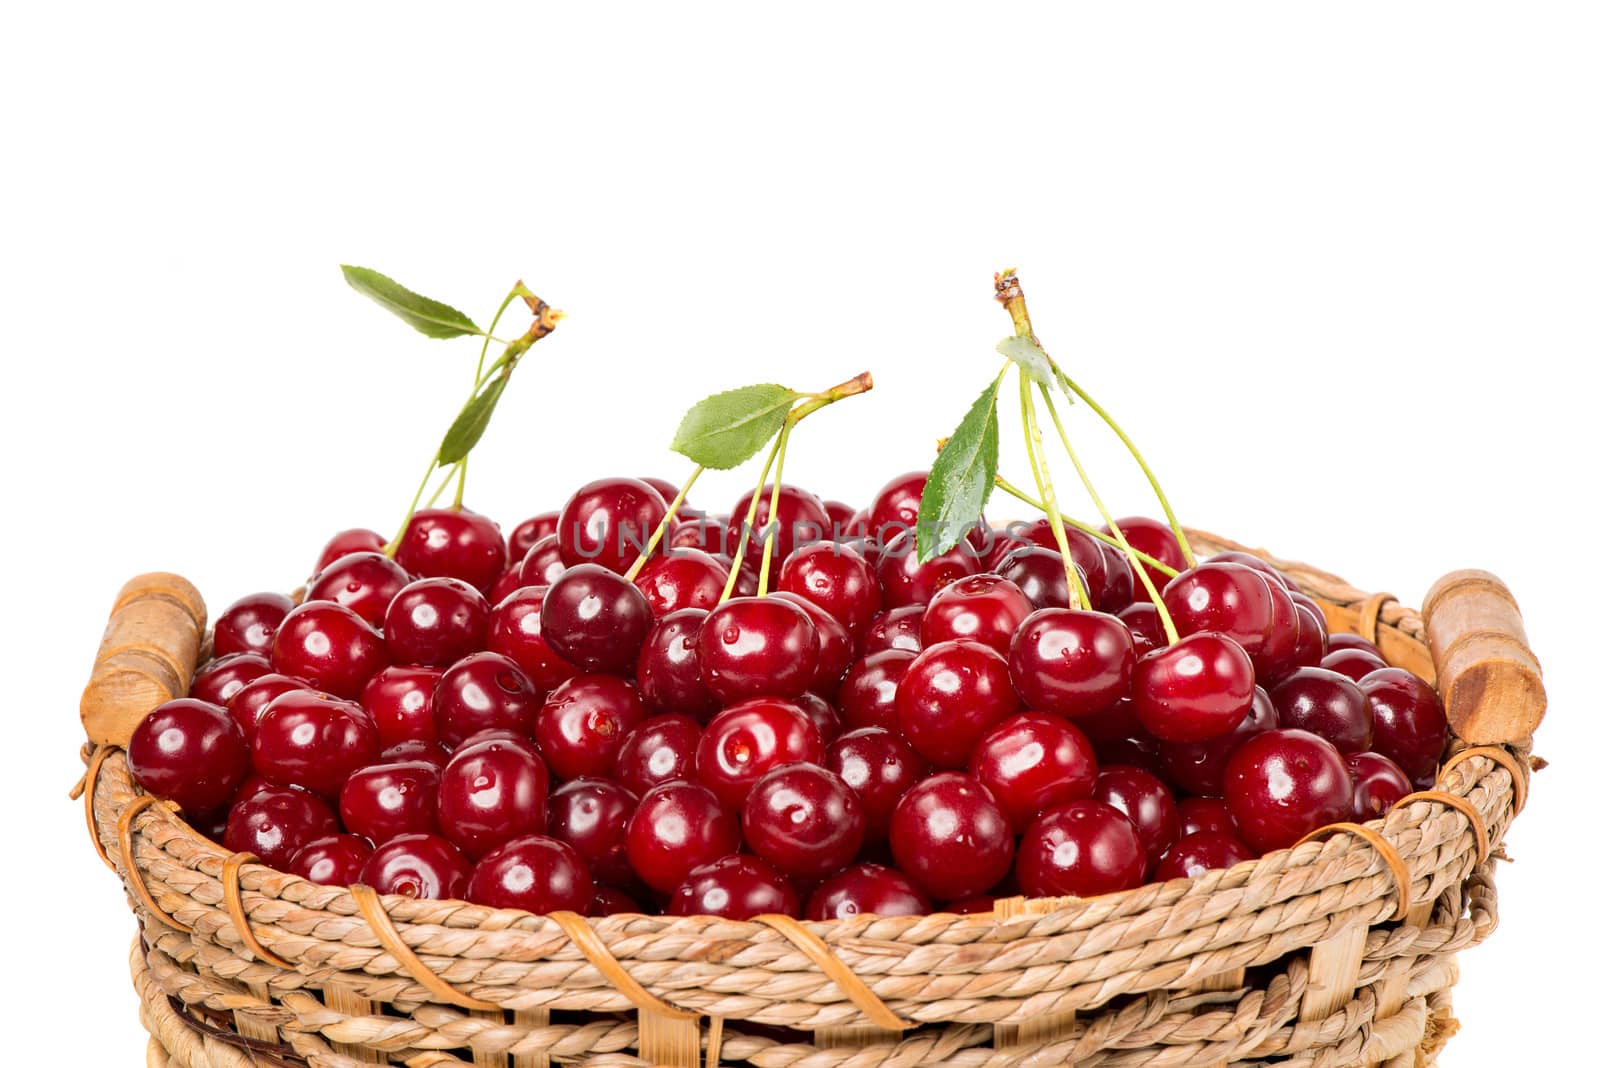 Sweet juicy cherry in basket by Draw05